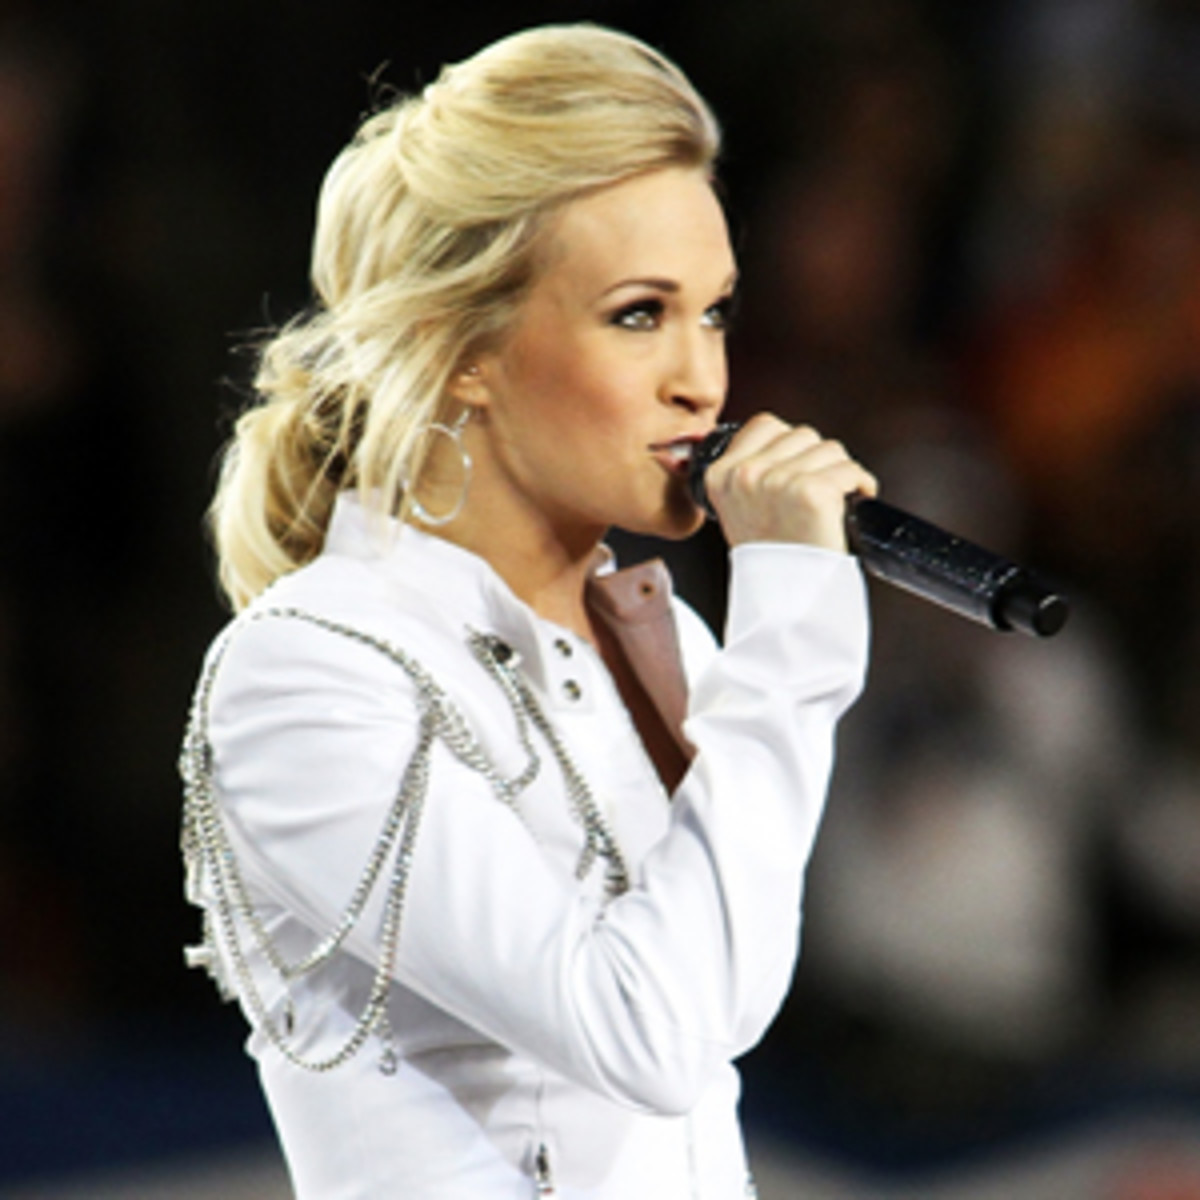 Six-time Grammy Award winner Carrie Underwood sang the National Anthem at Super Bowl XLIV. (Alexander Tamargo/Getty Images)